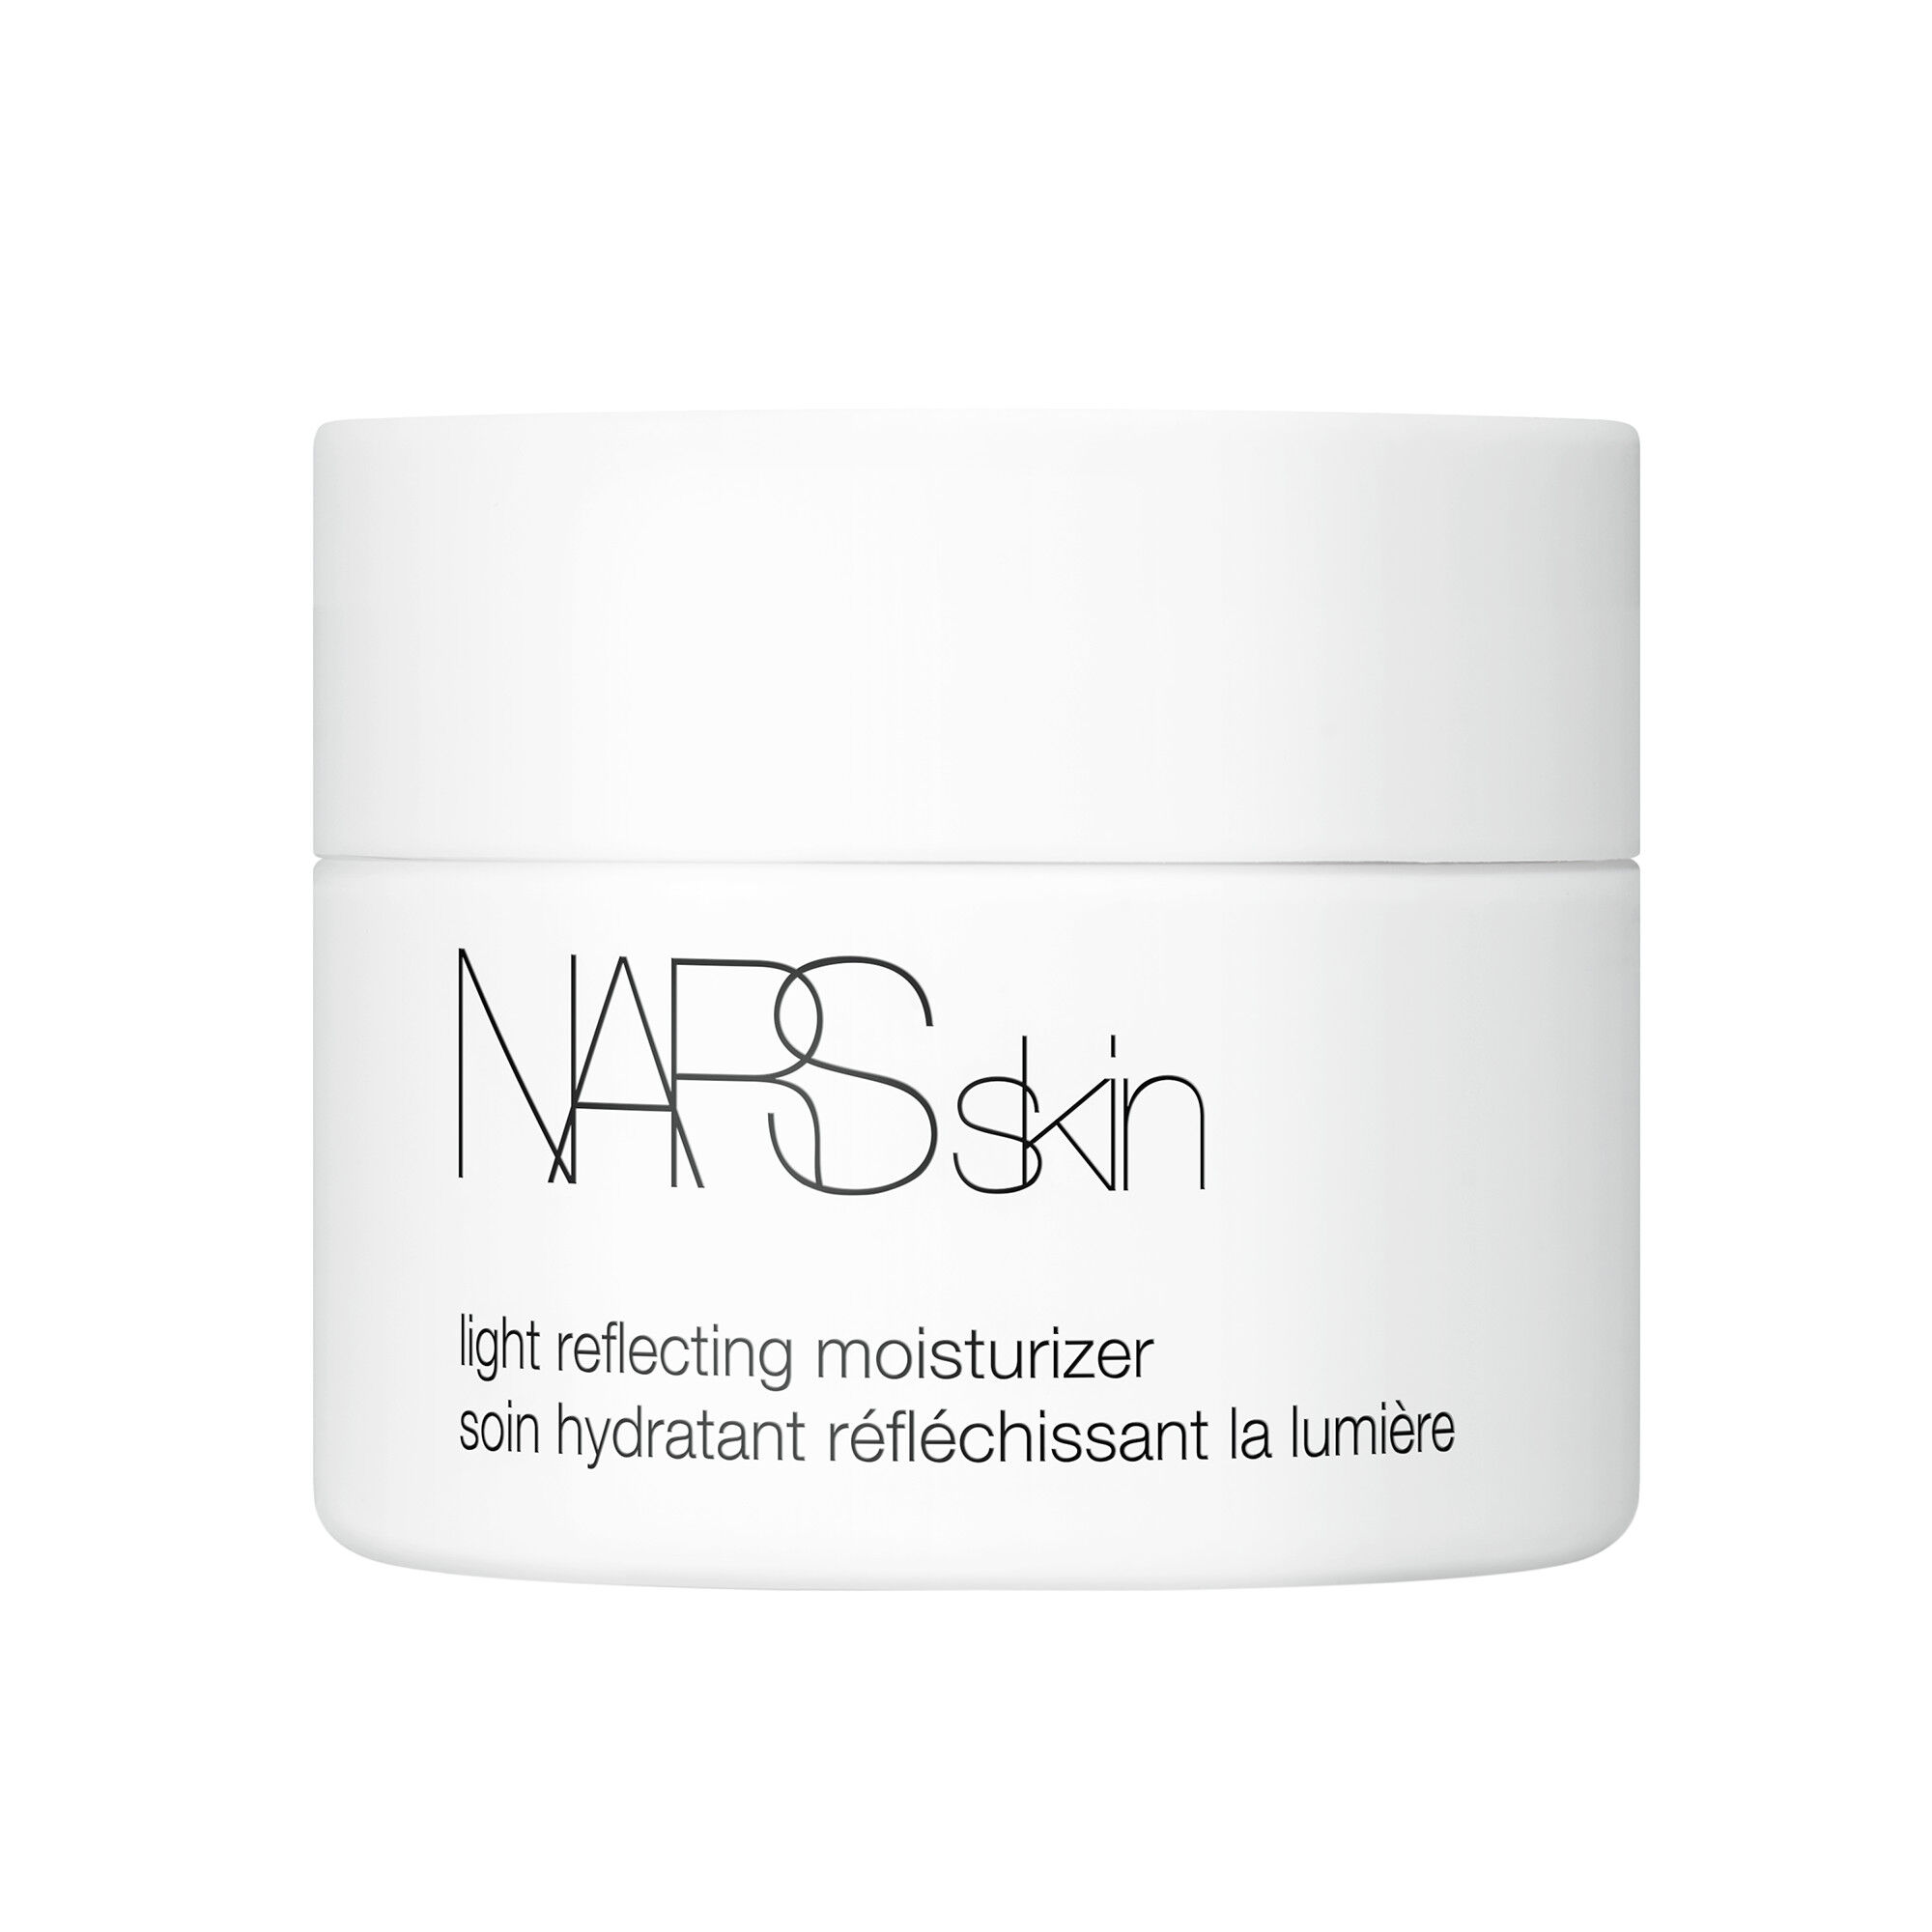 NARS Skincare: Moisturizers, Serums & Skincare Products | NARS 